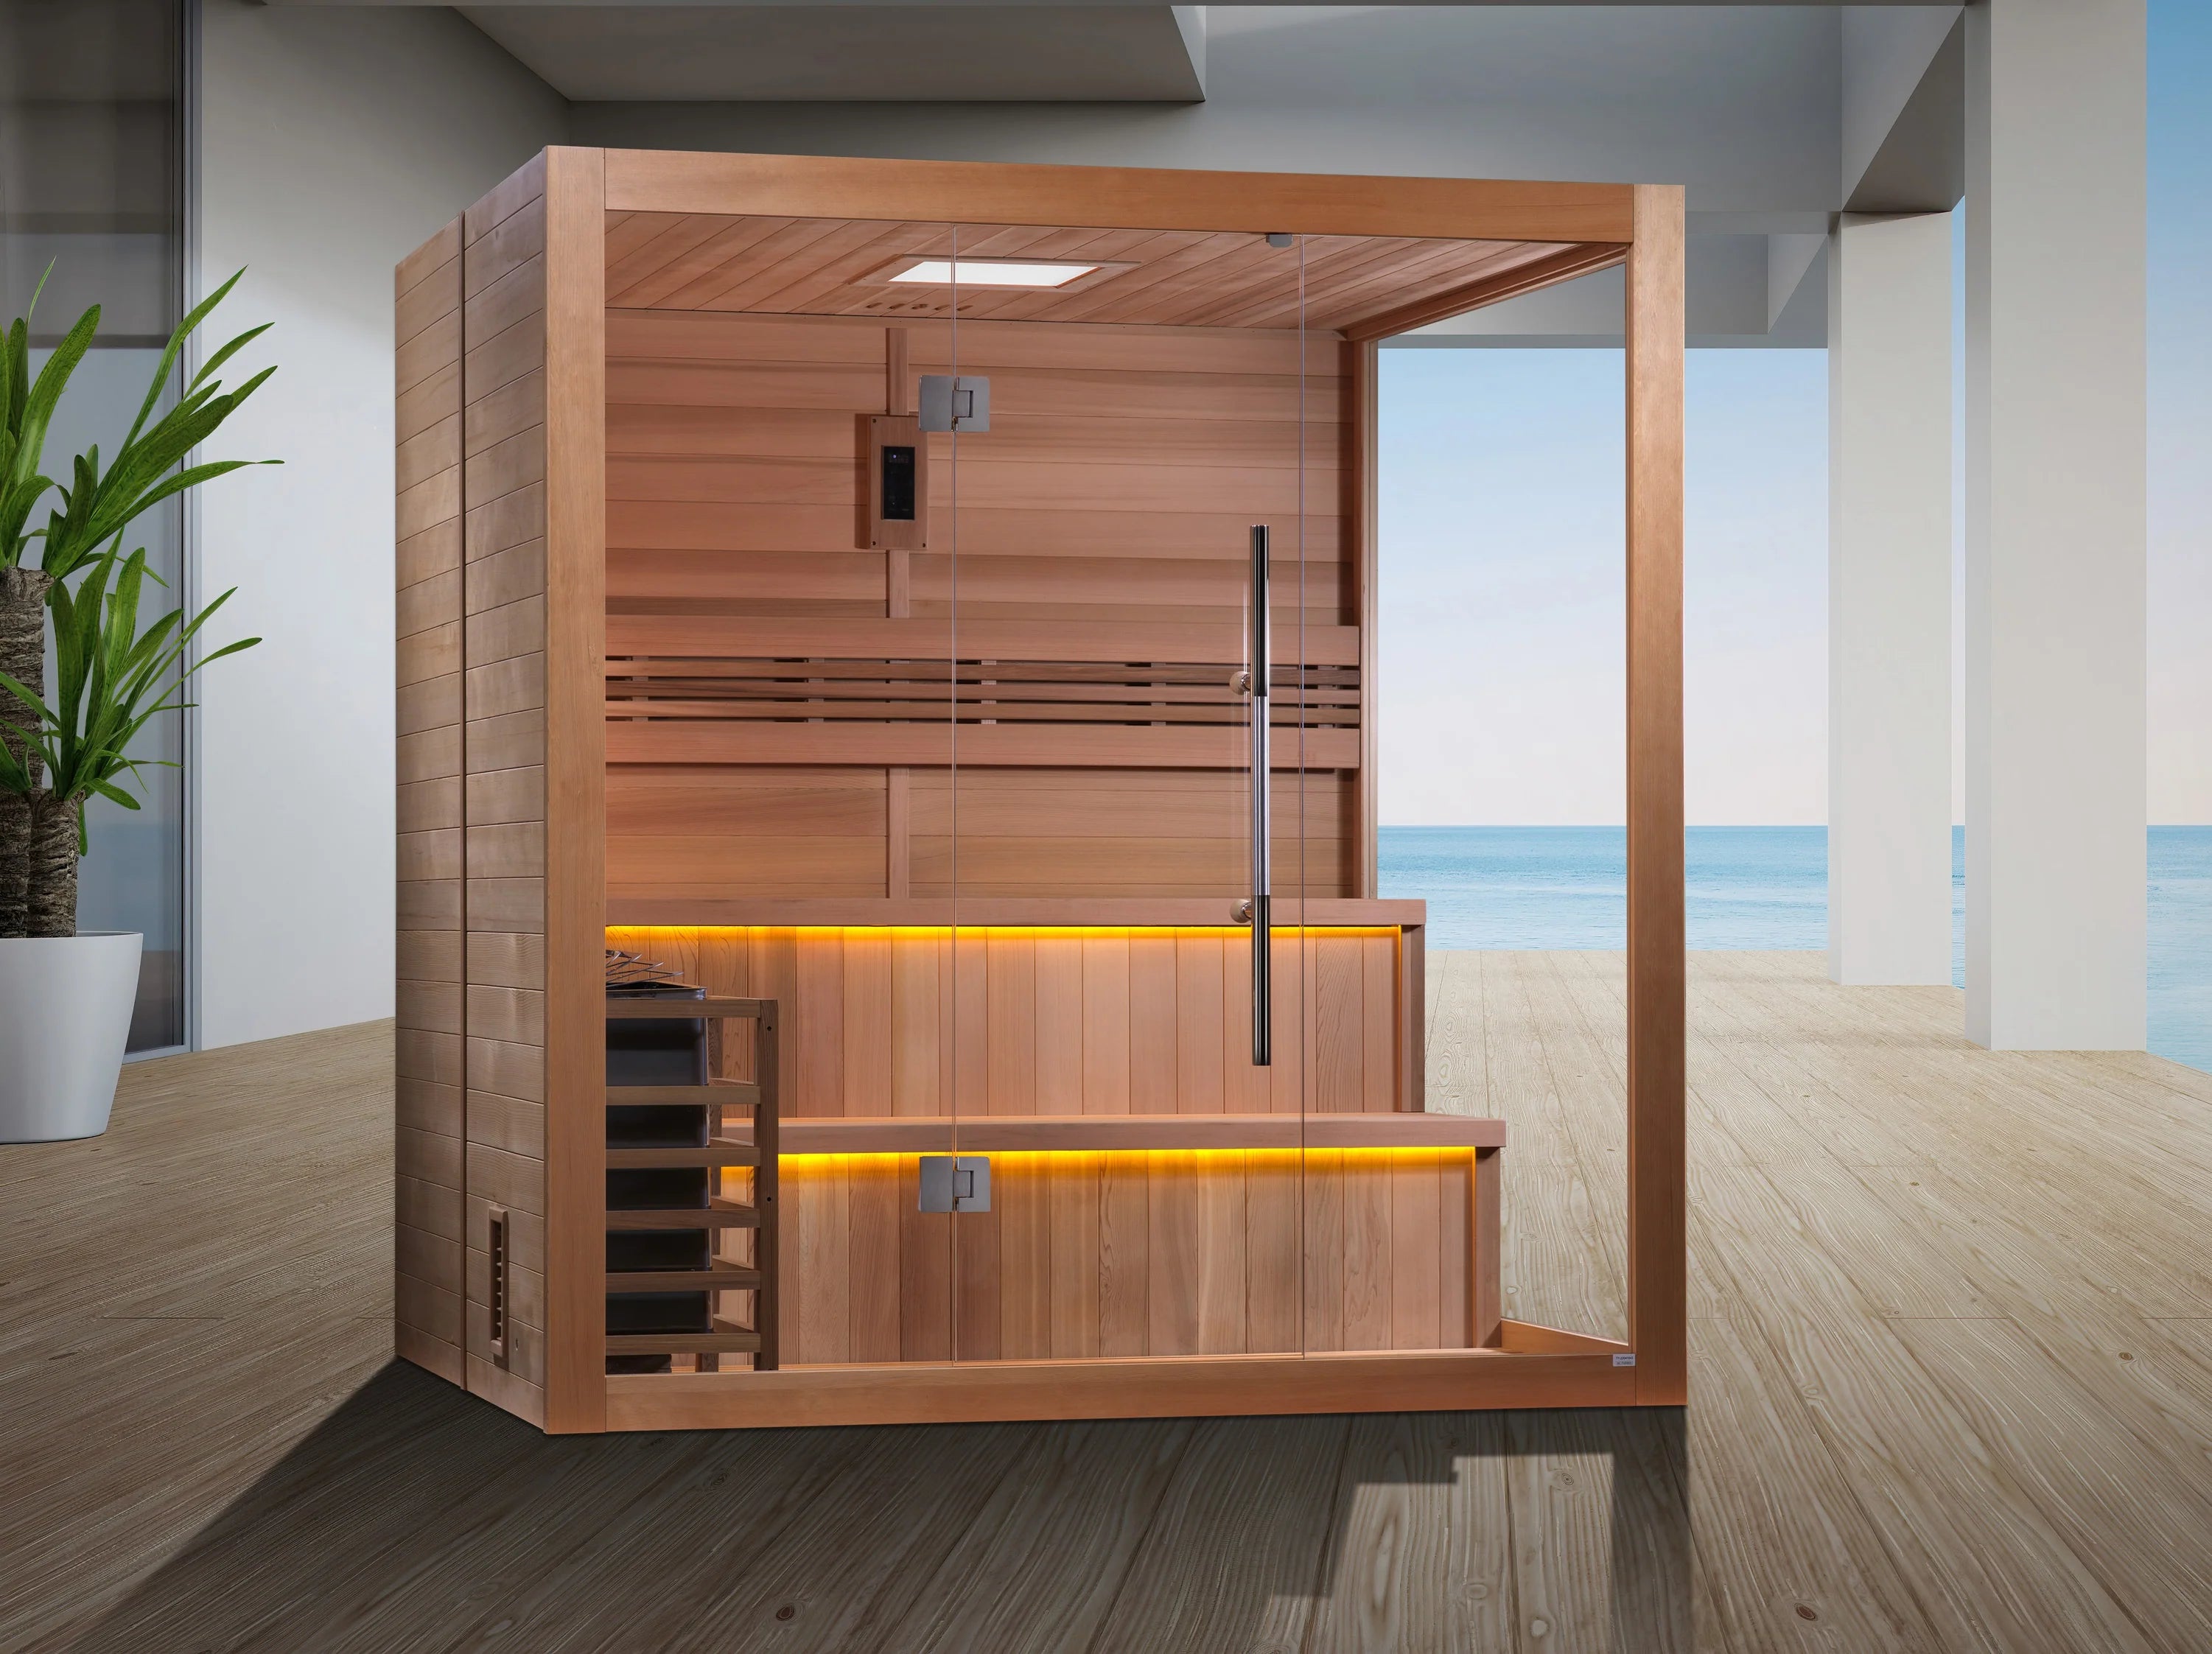 Golden Designs Kuusamo Edition 6 Person Indoor Traditional Sauna Indoor Sauna Golden Designs Saunas   